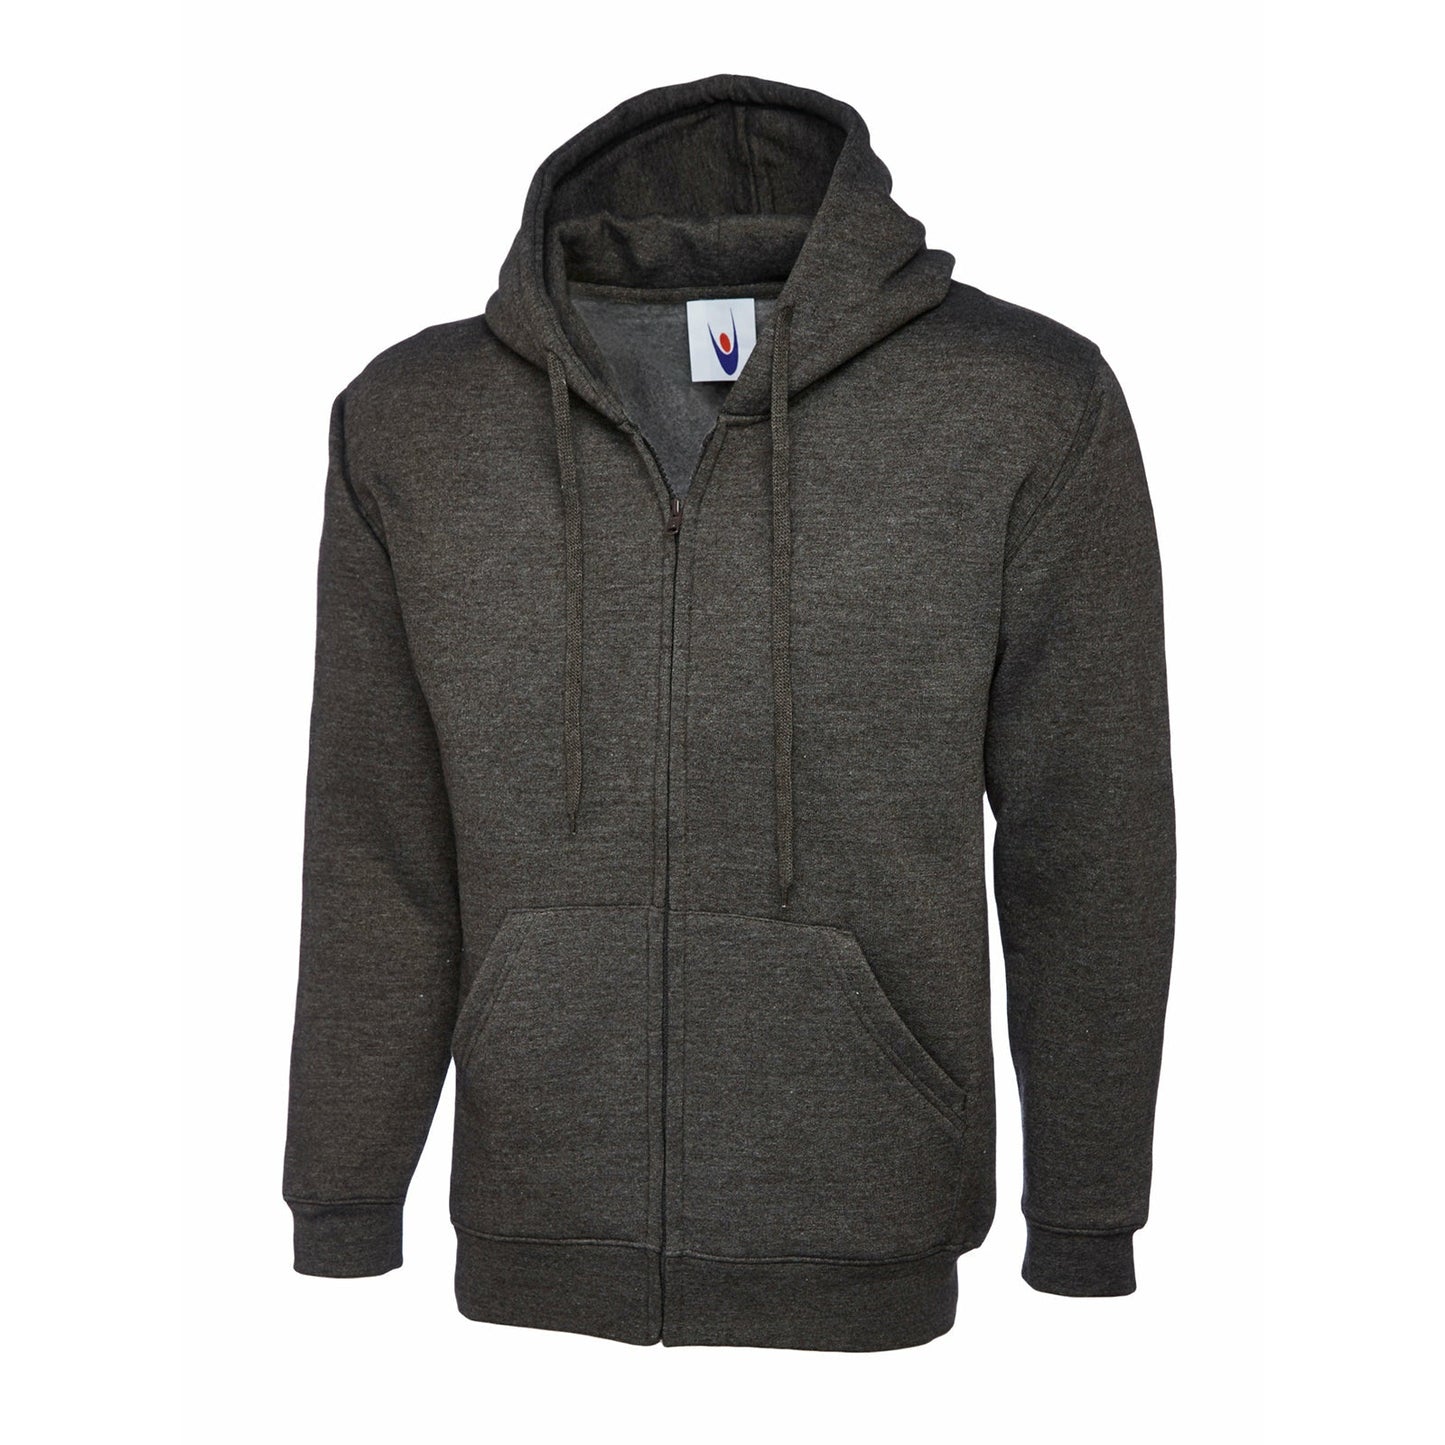 Adults Classic Full Zip Hooded Sweatshirt Charcoal Grey